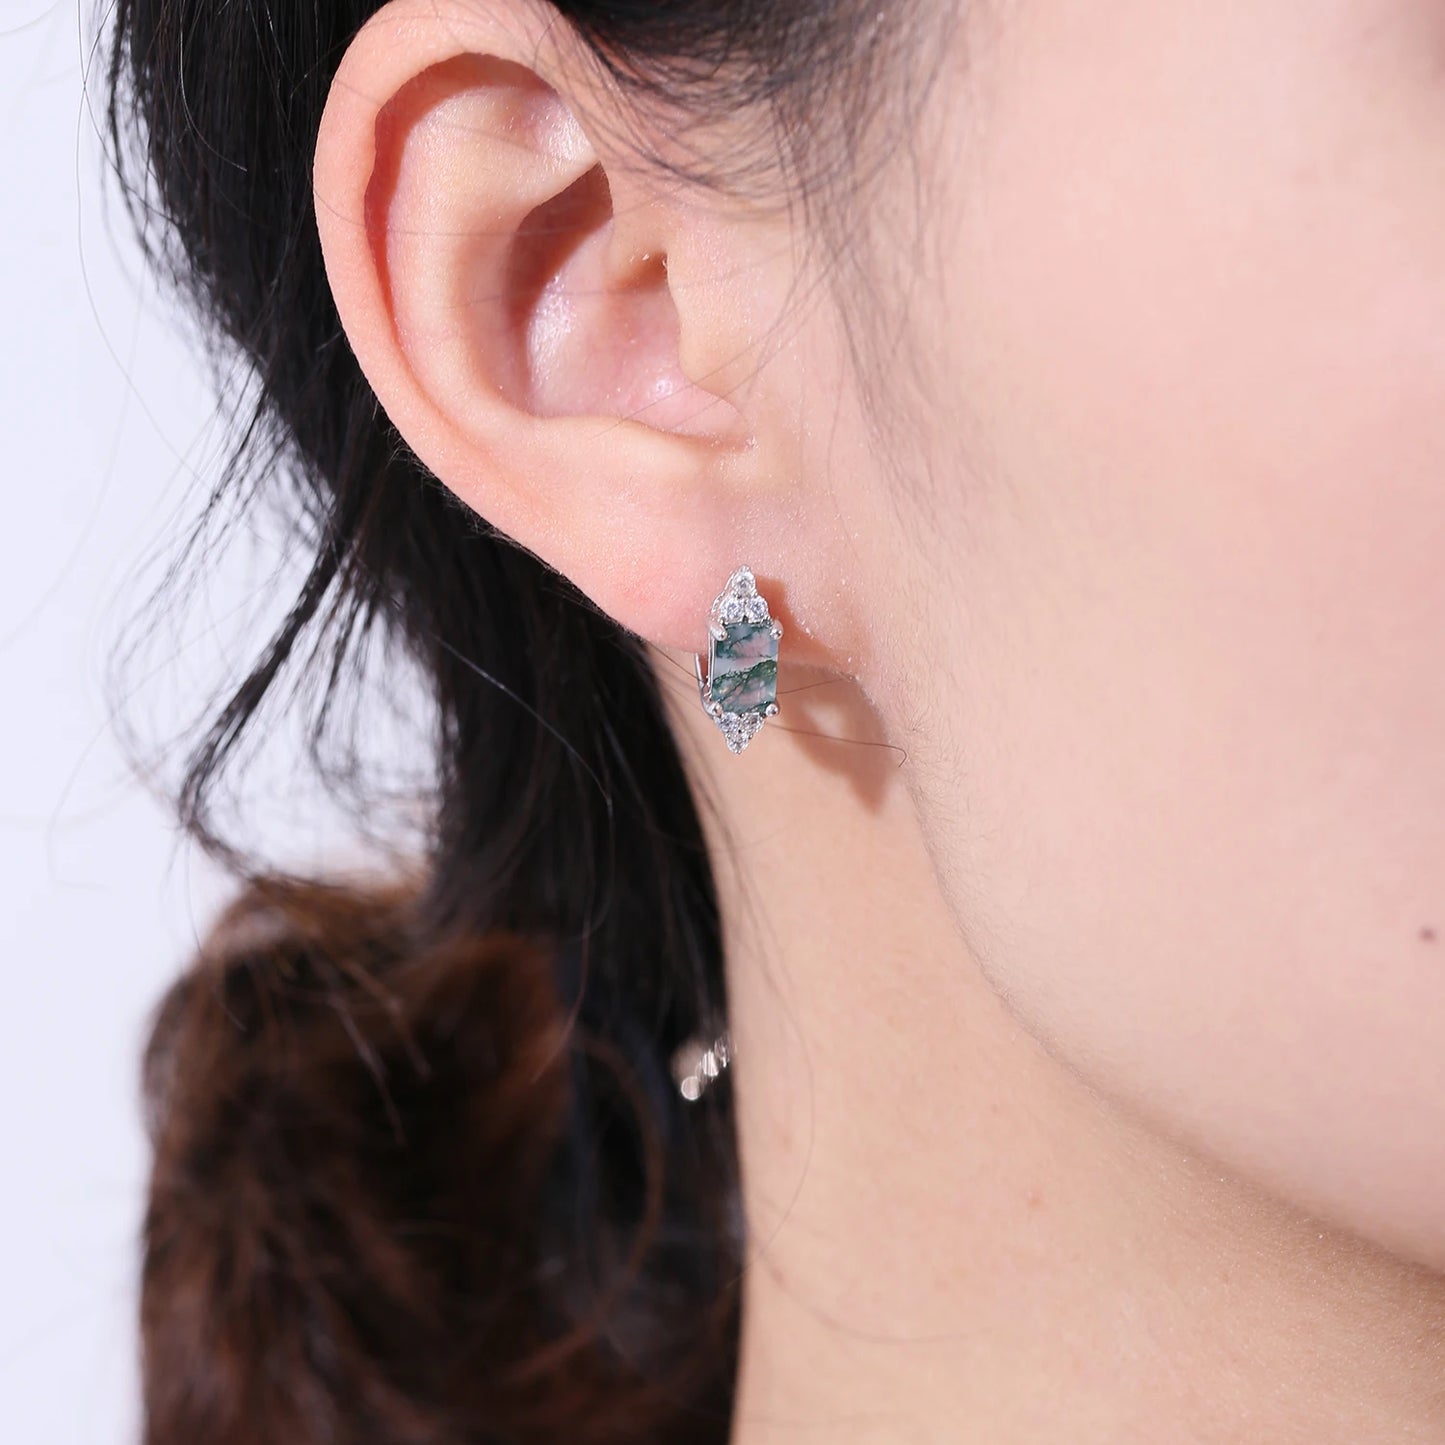 GEM'S BALLET Unique 5x7mm Octagon Cut Moss Agate Studs Earrings in 925 Sterling Silver Dainty Wedding Earrings Gift For Her